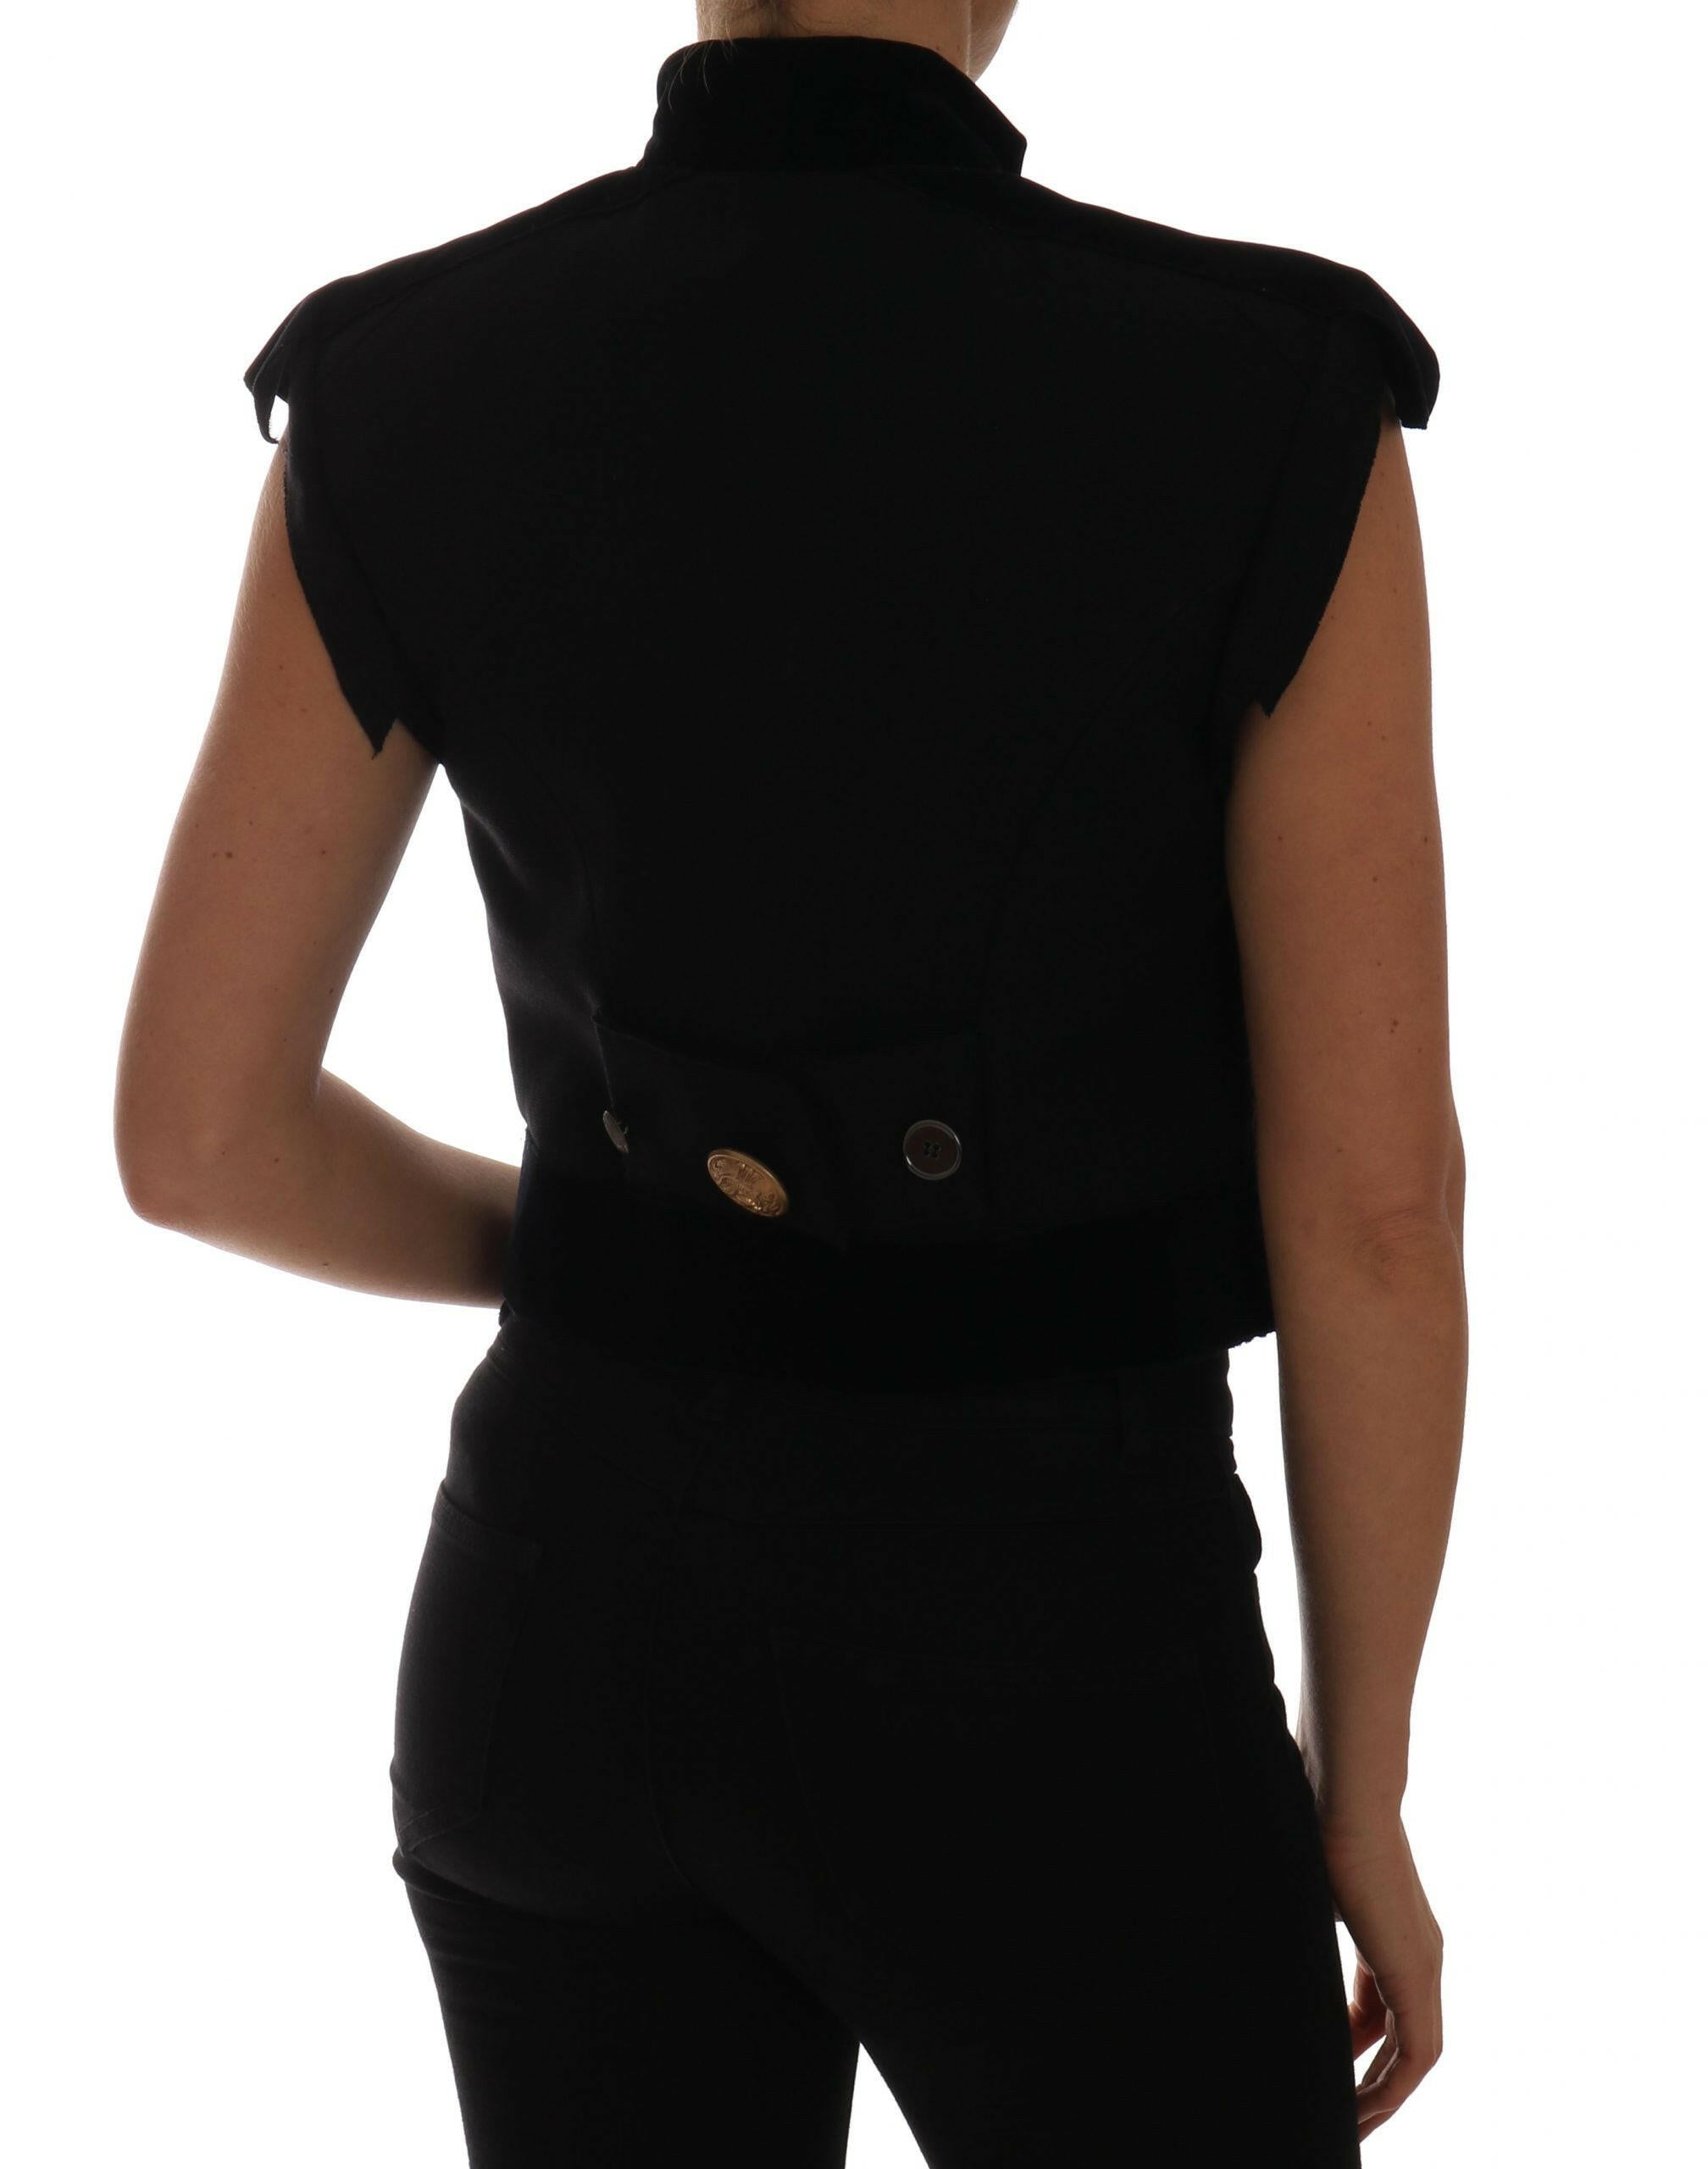 Dolce & Gabbana Embellished Black Military Style Vest.